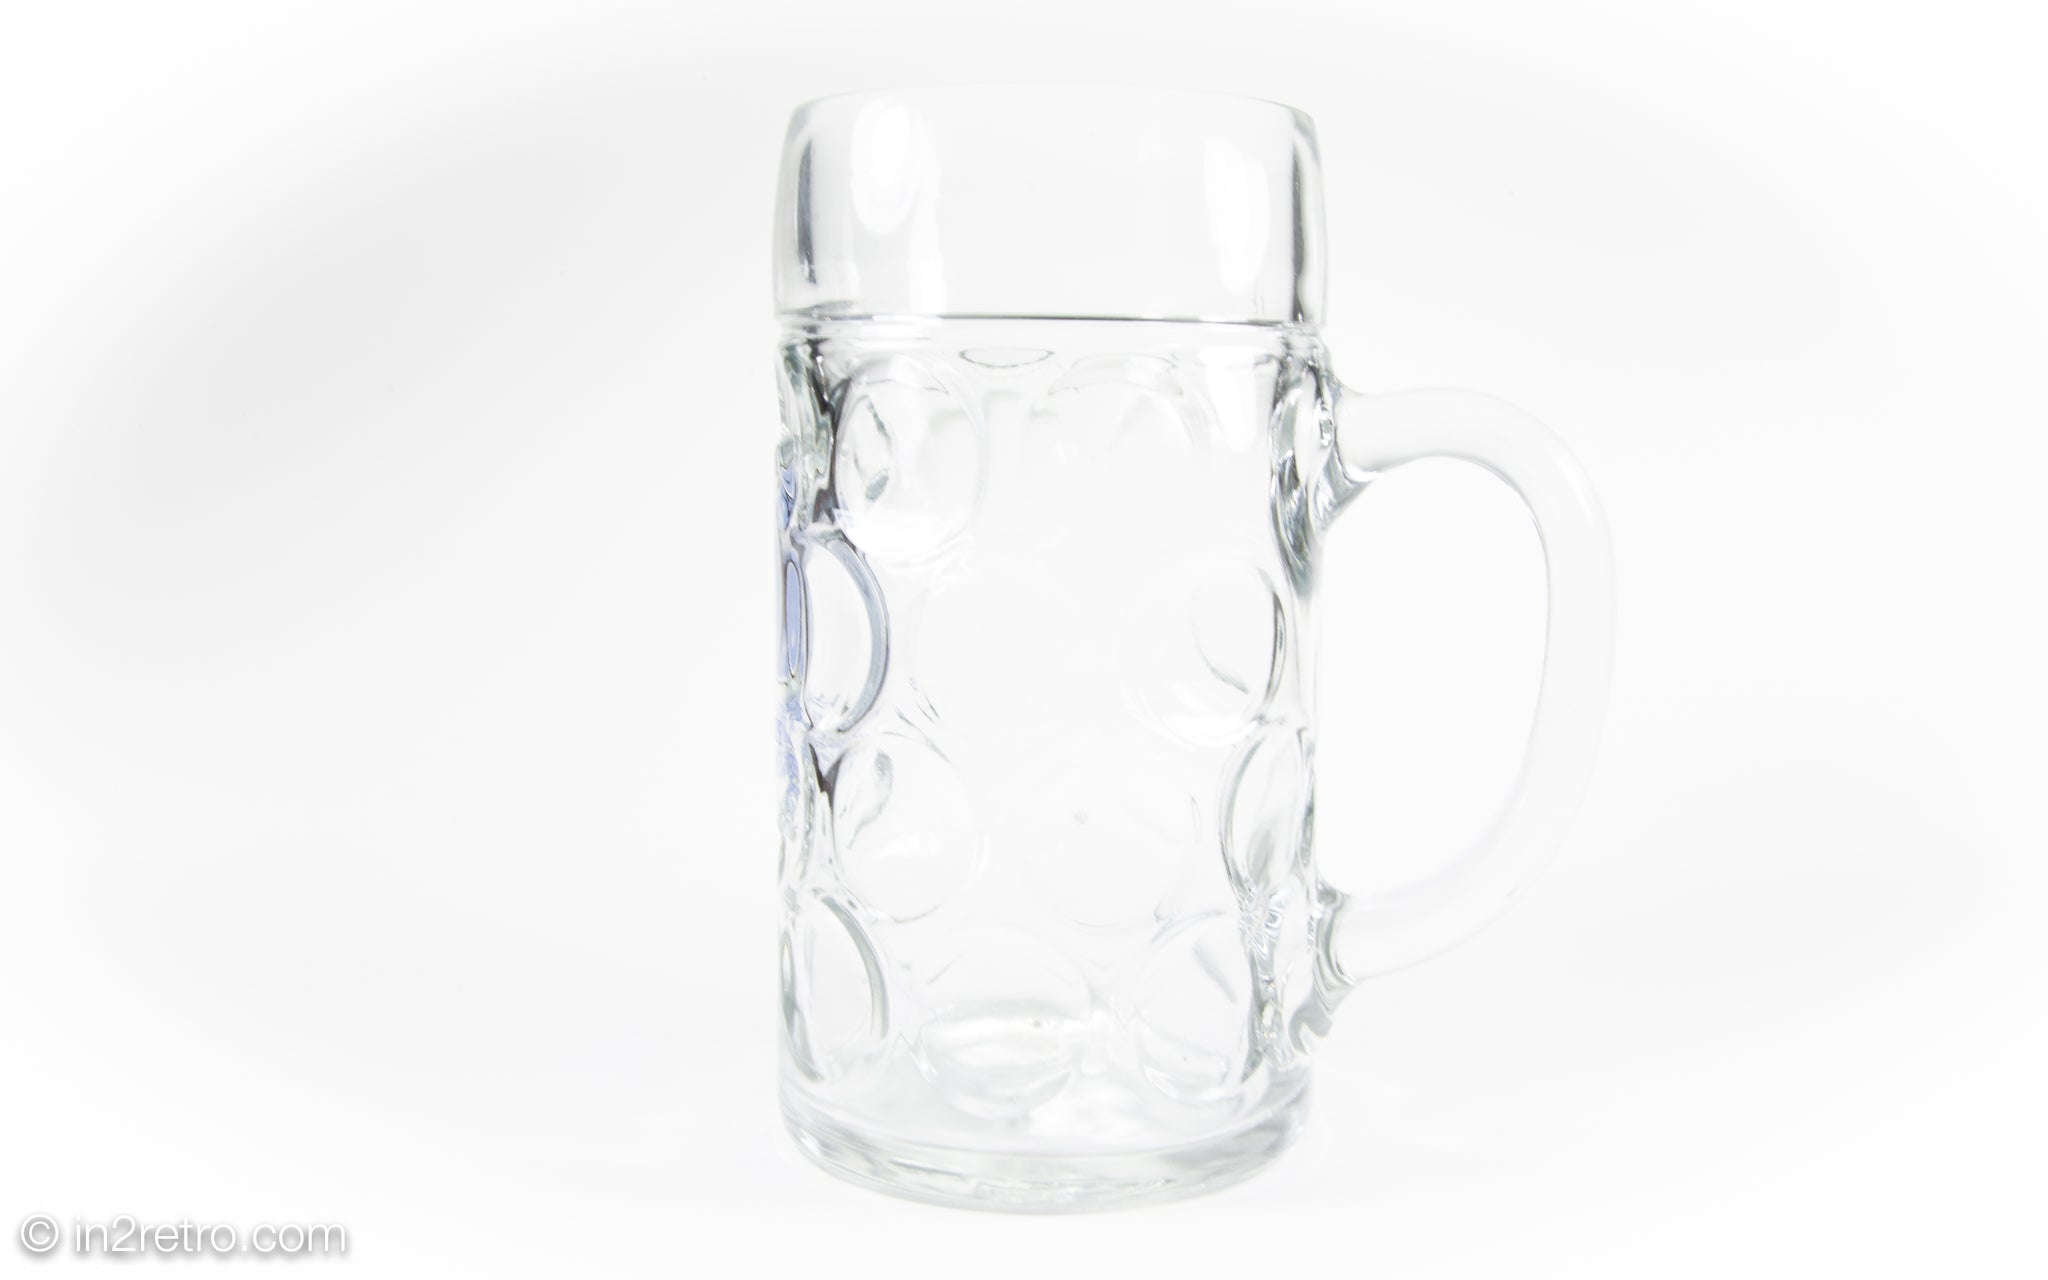 Dimpled Isar Beer Mug Set of 4